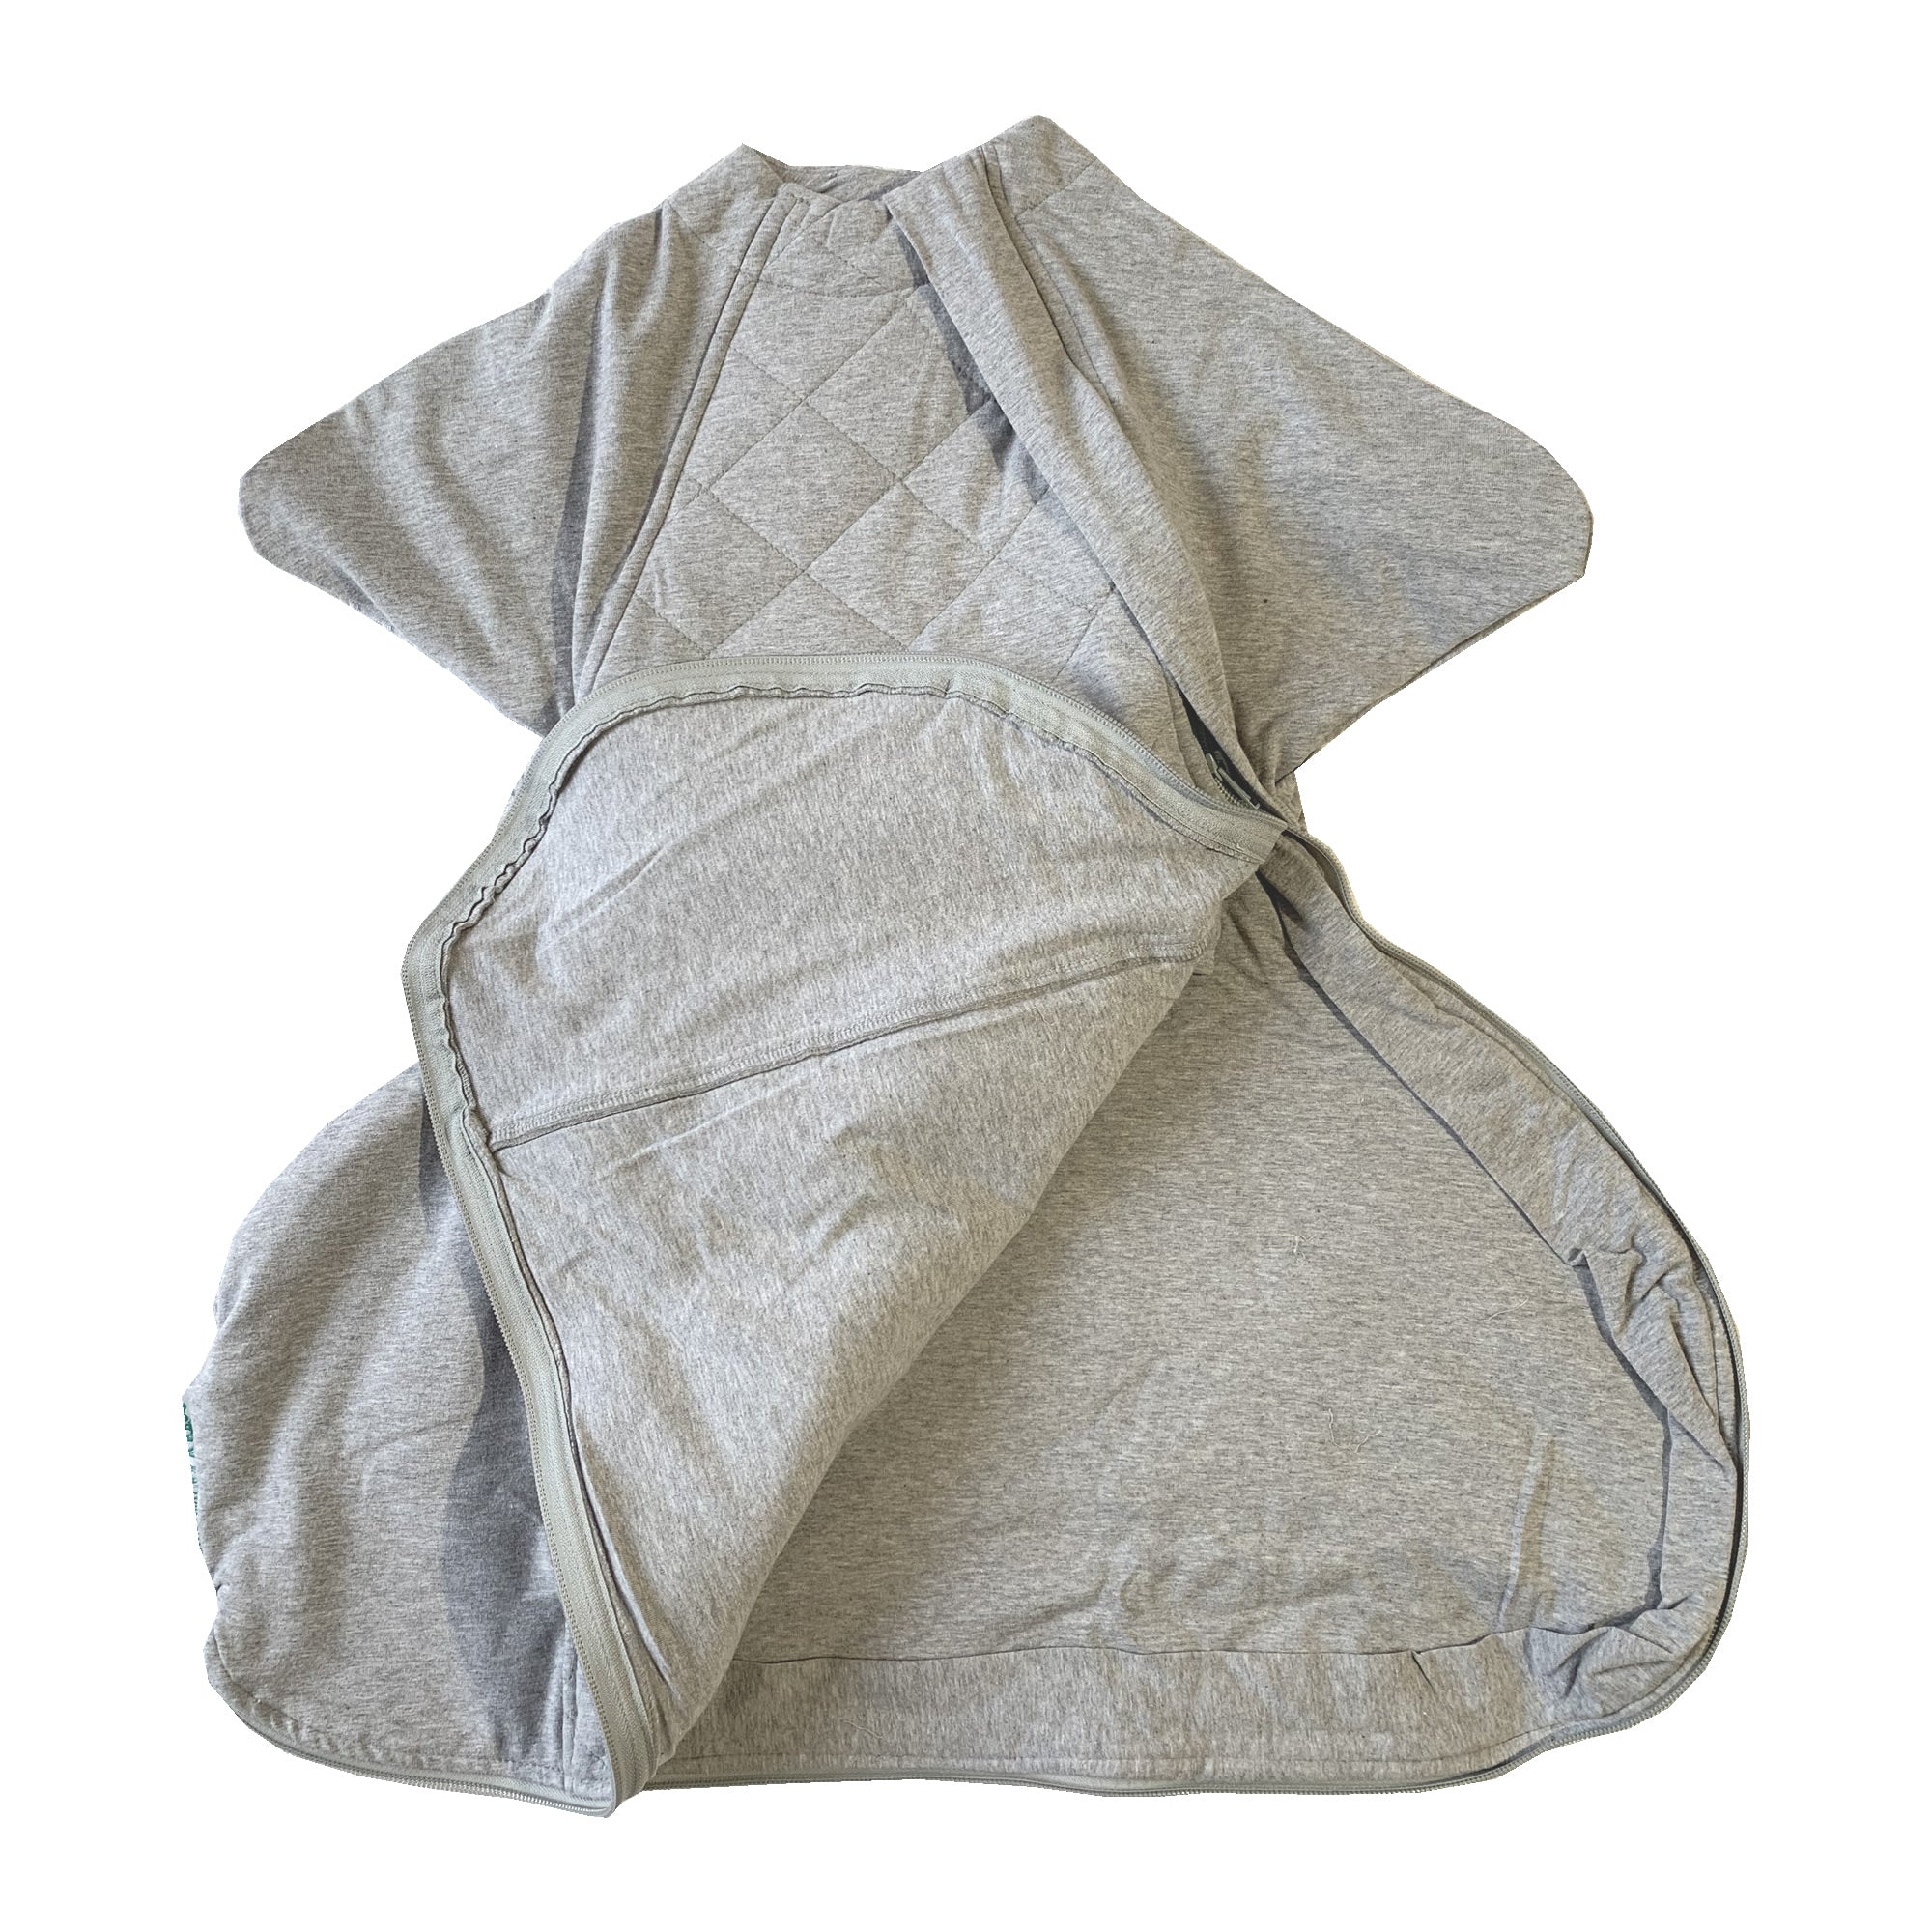 Baby sleep sack for babies with hip dysplasia